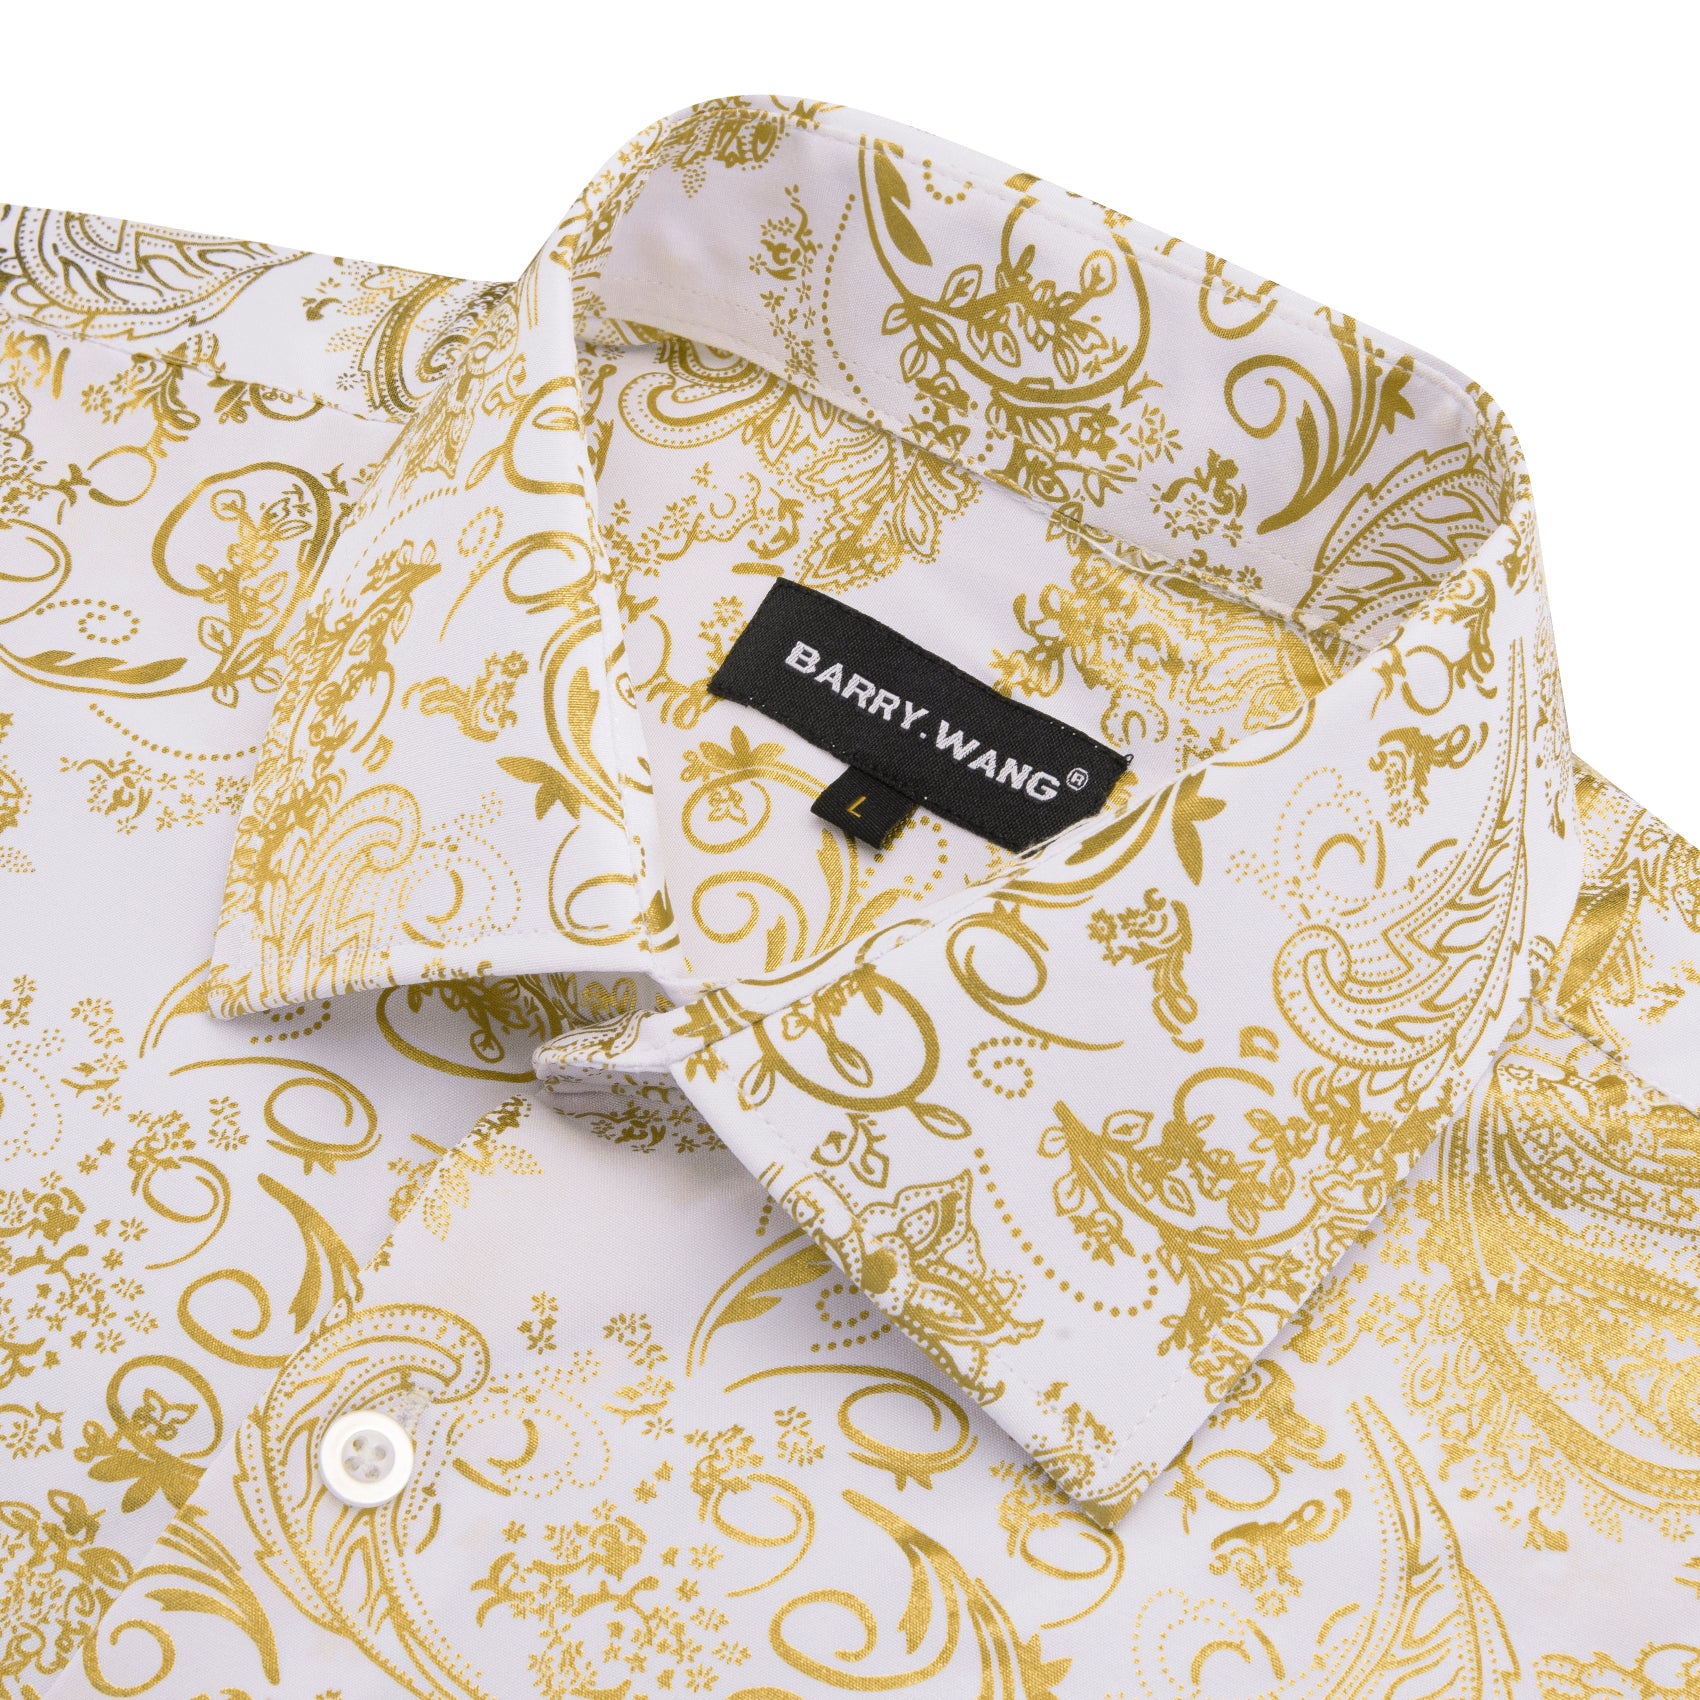 Barry.wang Button Down Shirt White Gold Paisley Silk Shirt for Mens